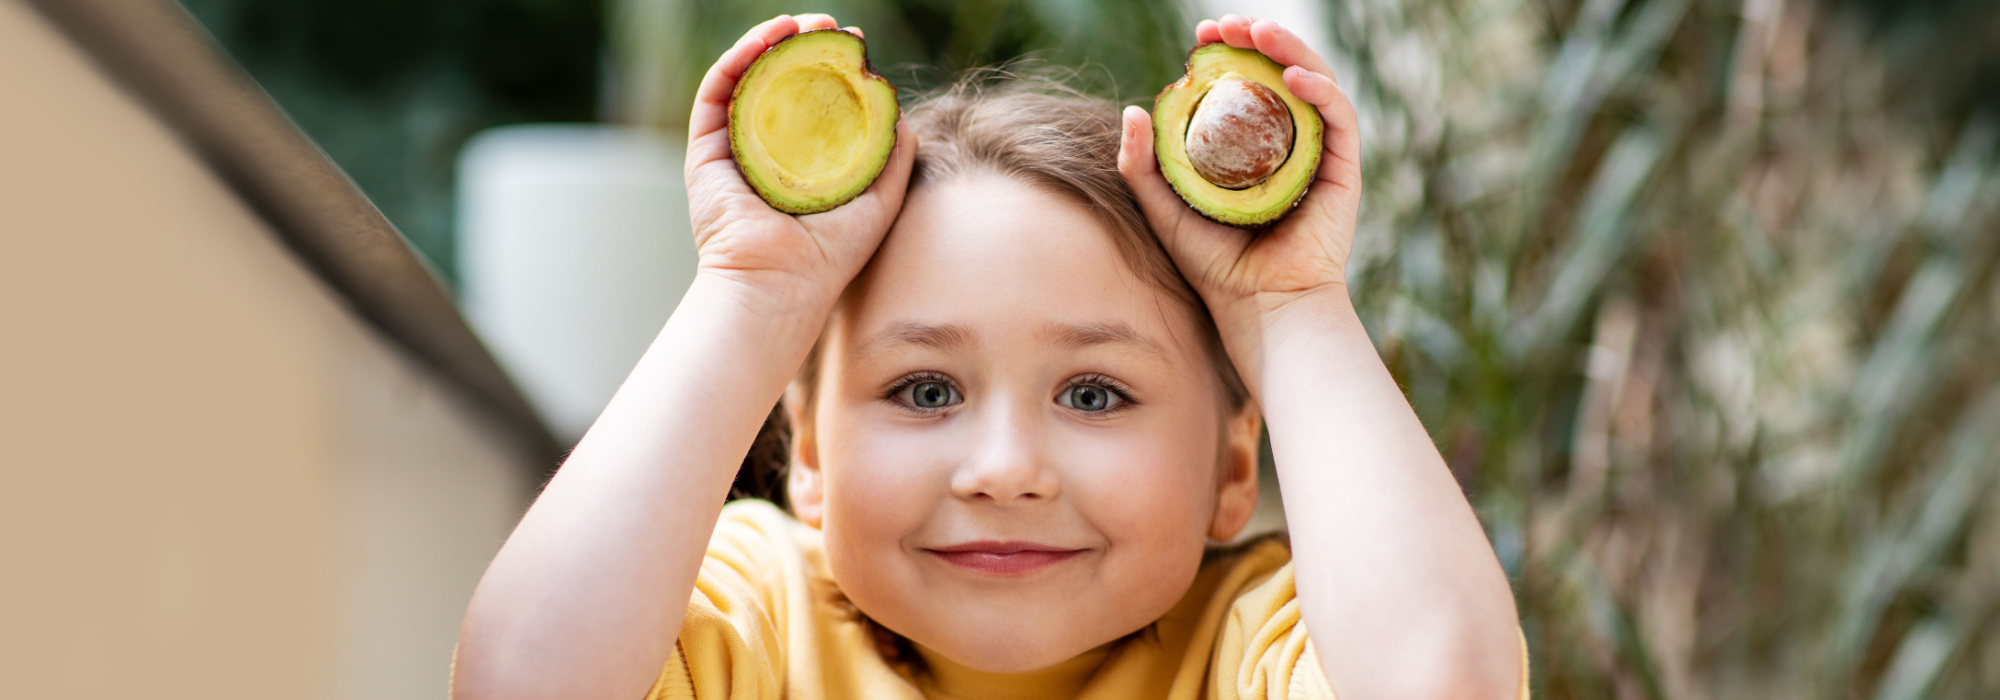 girl holding a sliced avocado on each hand, above her head